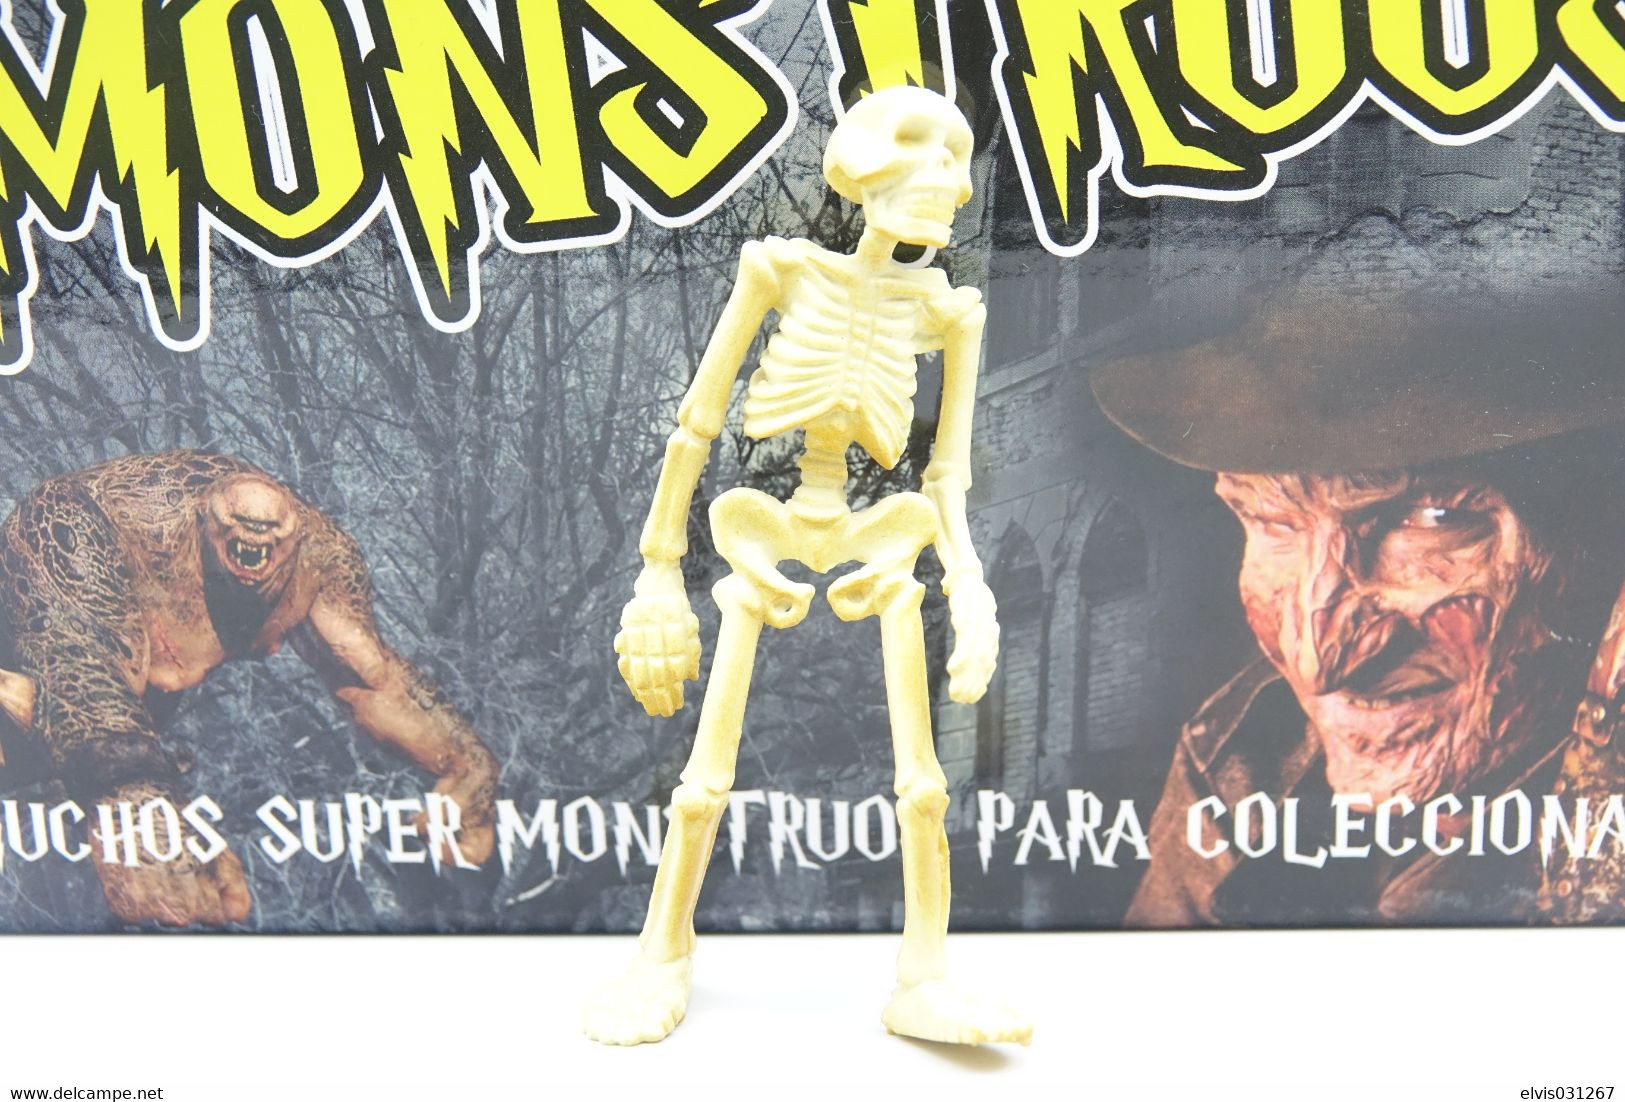 Vintage ACTION FIGURE : COLLECTION MONSTERS SUPER MONSTRUOS Skeleton - 1990's - Original Yolanda Toys - Action Man